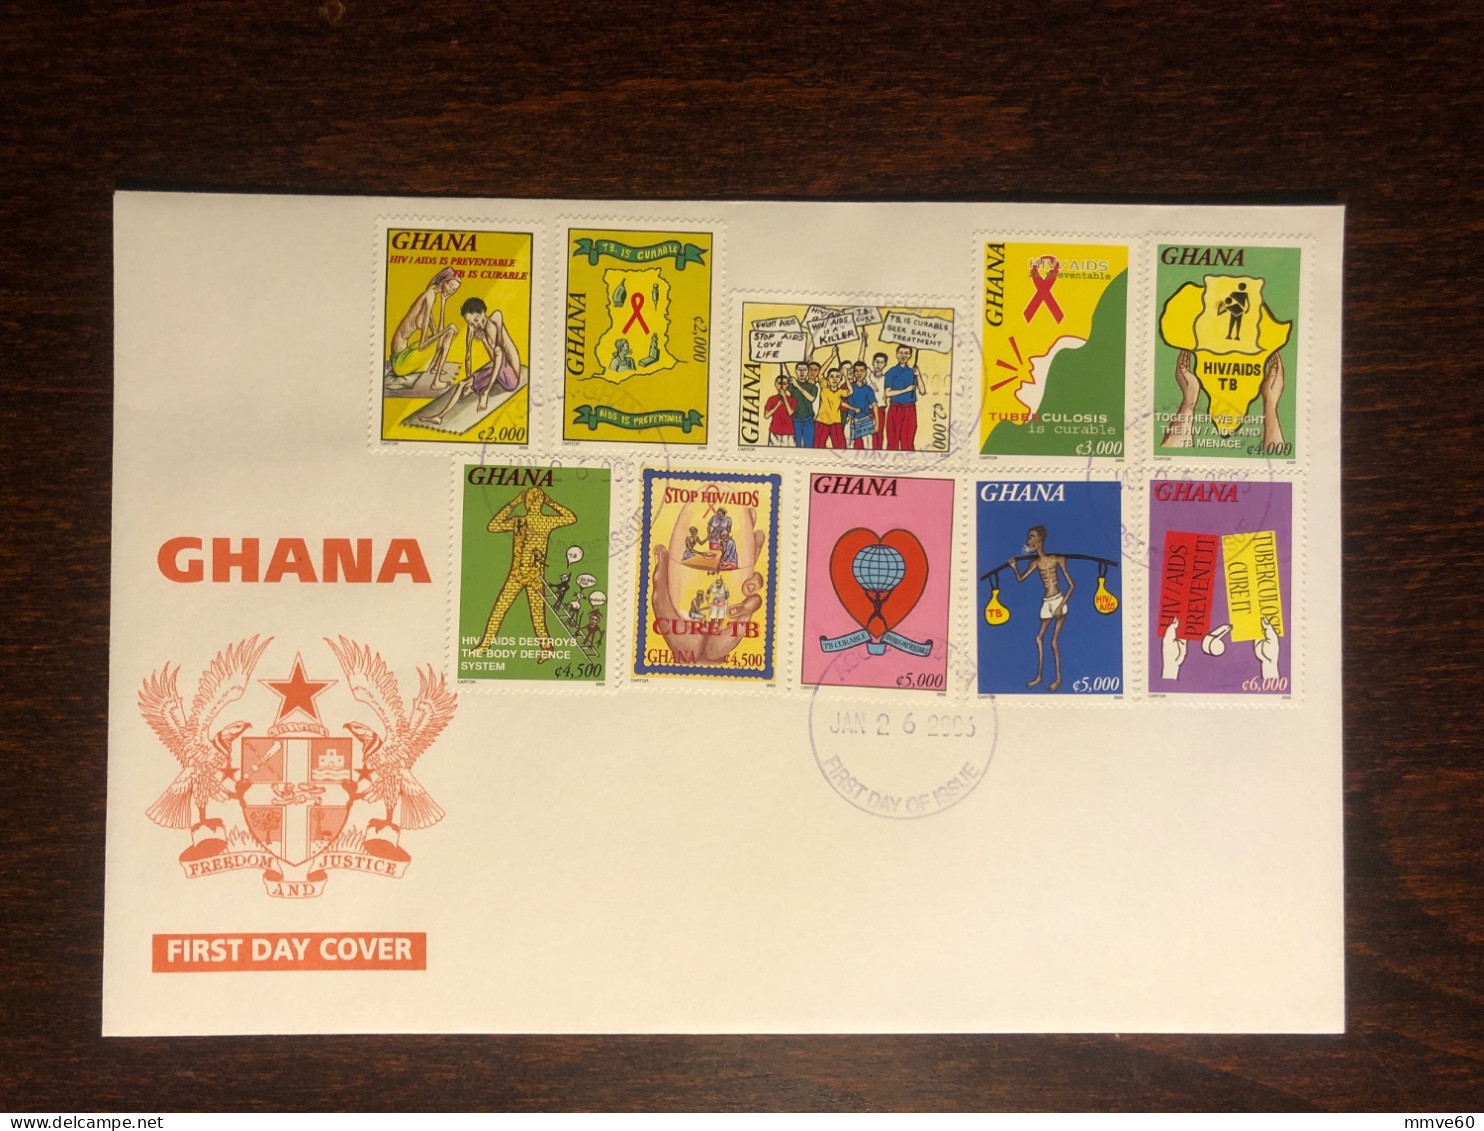 GHANA FDC COVER 2006 YEAR AIDS SIDA HEALTH MEDICINE STAMPS - Ghana (1957-...)